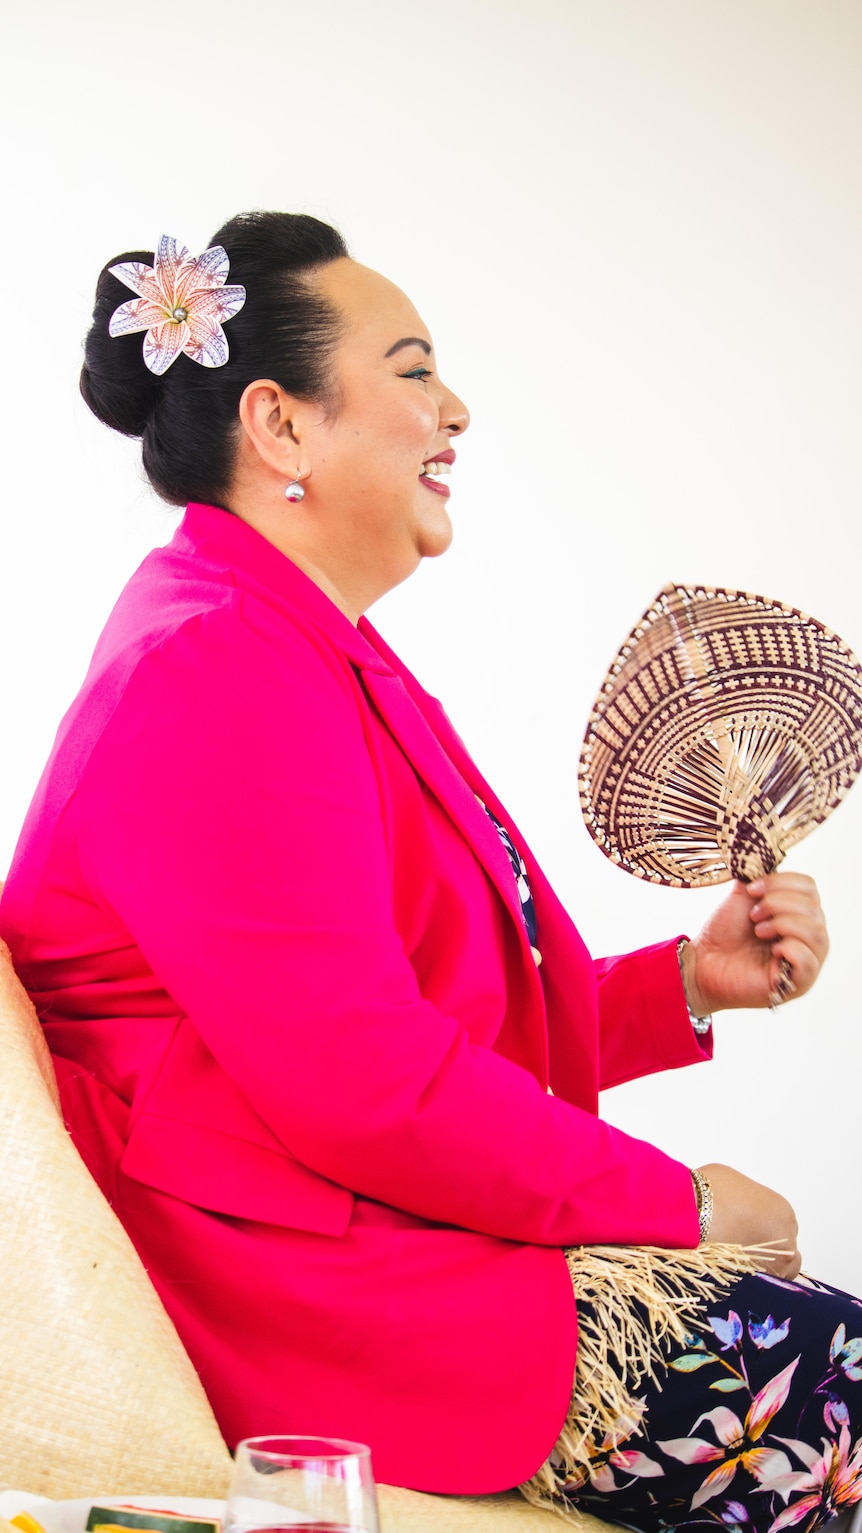 HRH Angelika Latufuipeka Tuku’aho, Princess of Tonga is seated on a chair, smiling and waving a fan